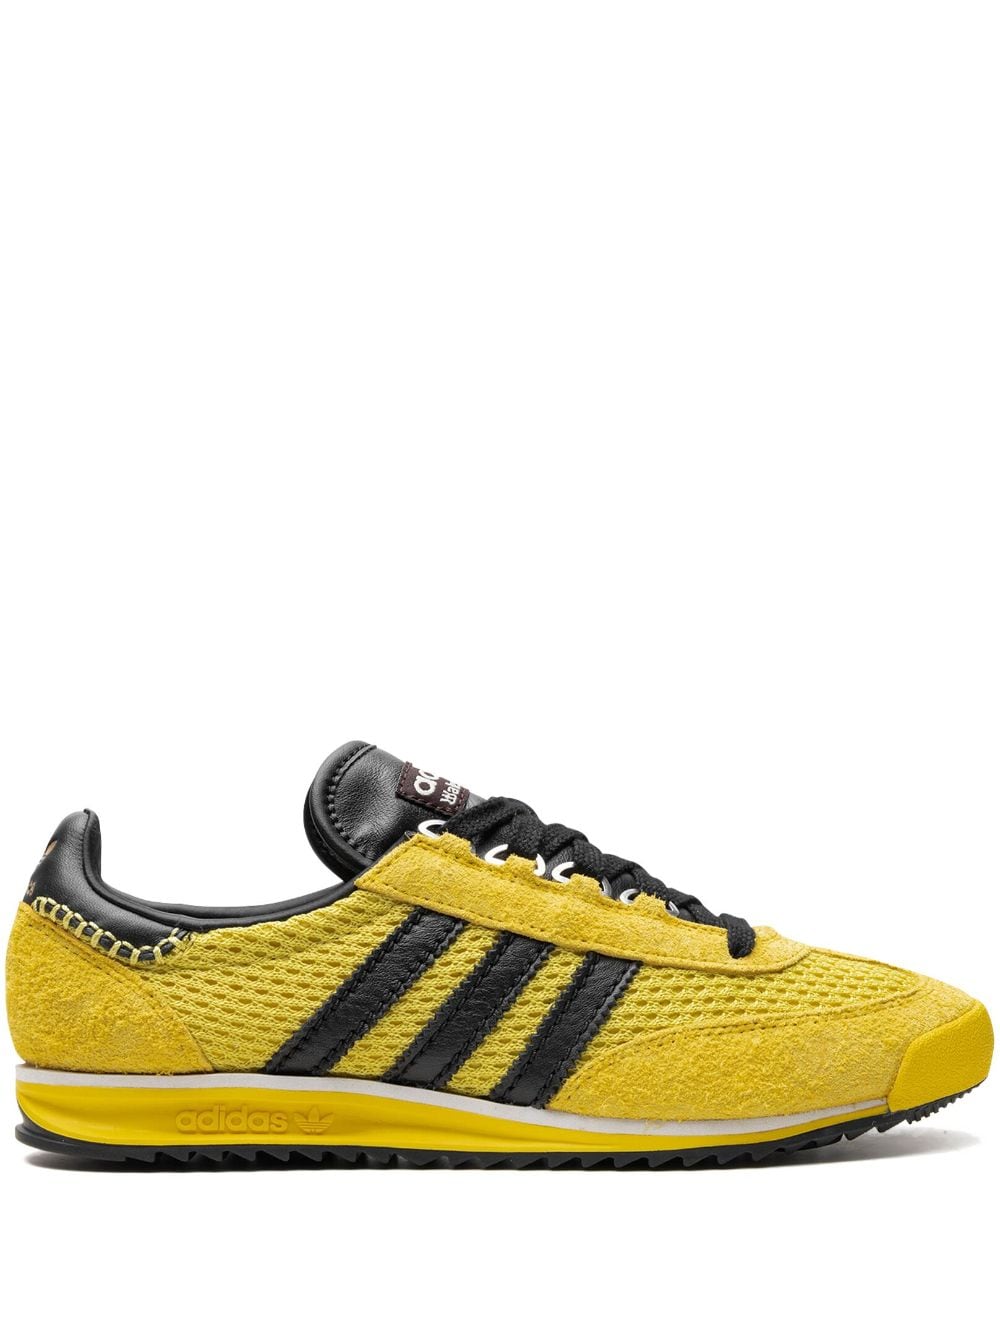 adidas x Wales Bonner SL 76 "Yellow" sneakers von adidas